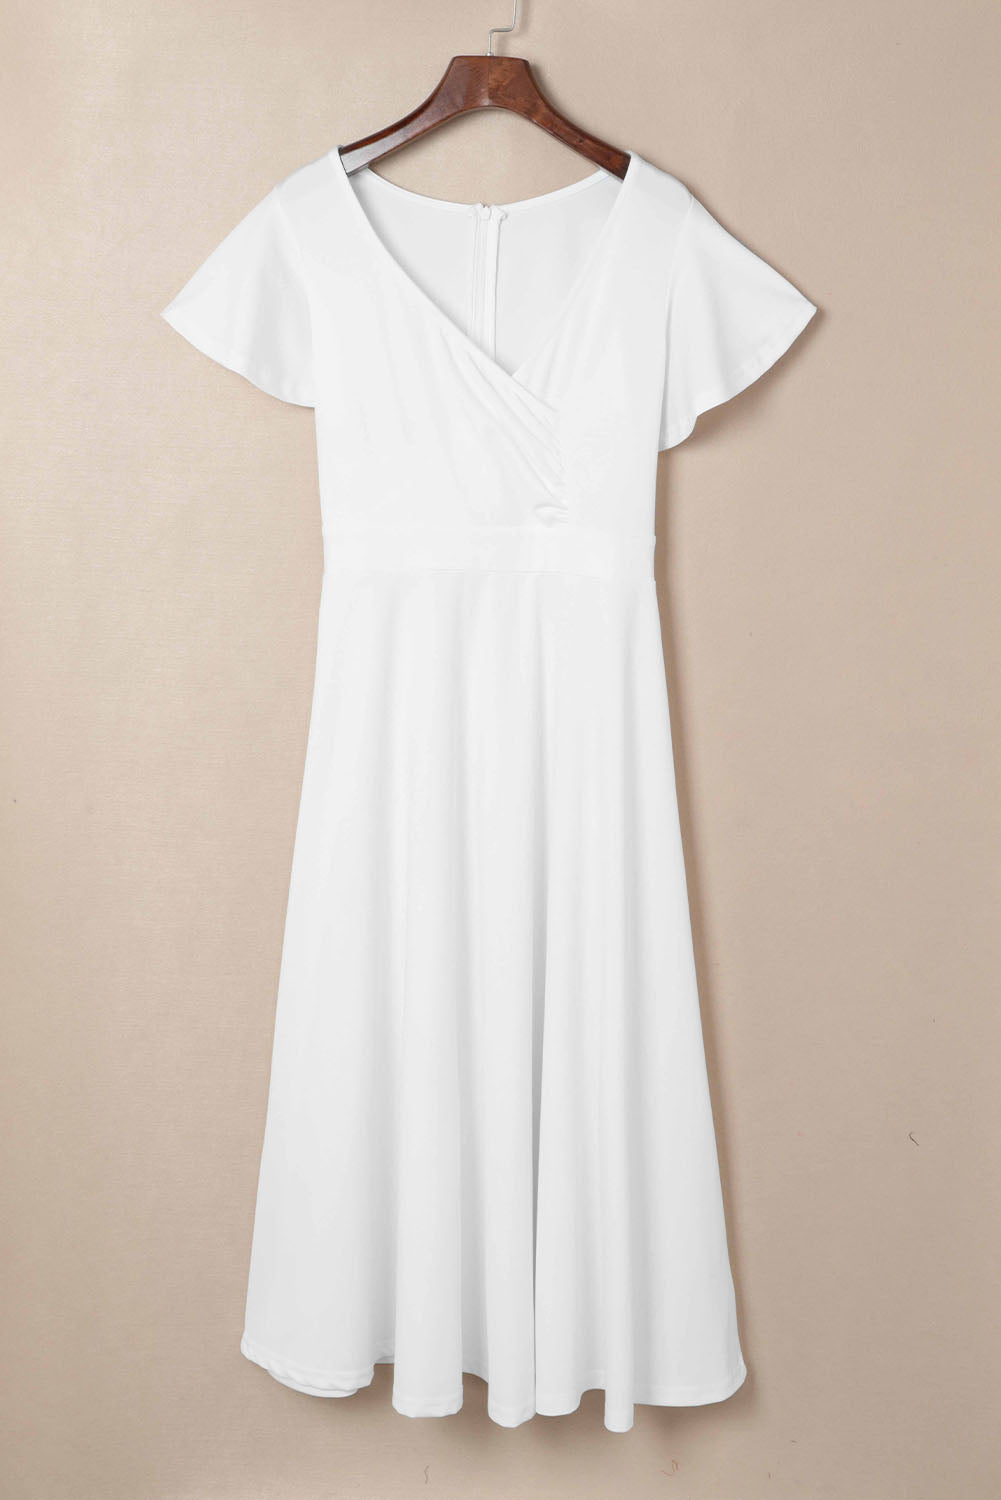 LC6110363-1-S, LC6110363-1-M, LC6110363-1-L, LC6110363-1-XL, LC6110363-1-2XL, White Womens V Neck Ruffle Sleeve Wrap Dress Midi Dress Cocktail Party Dress